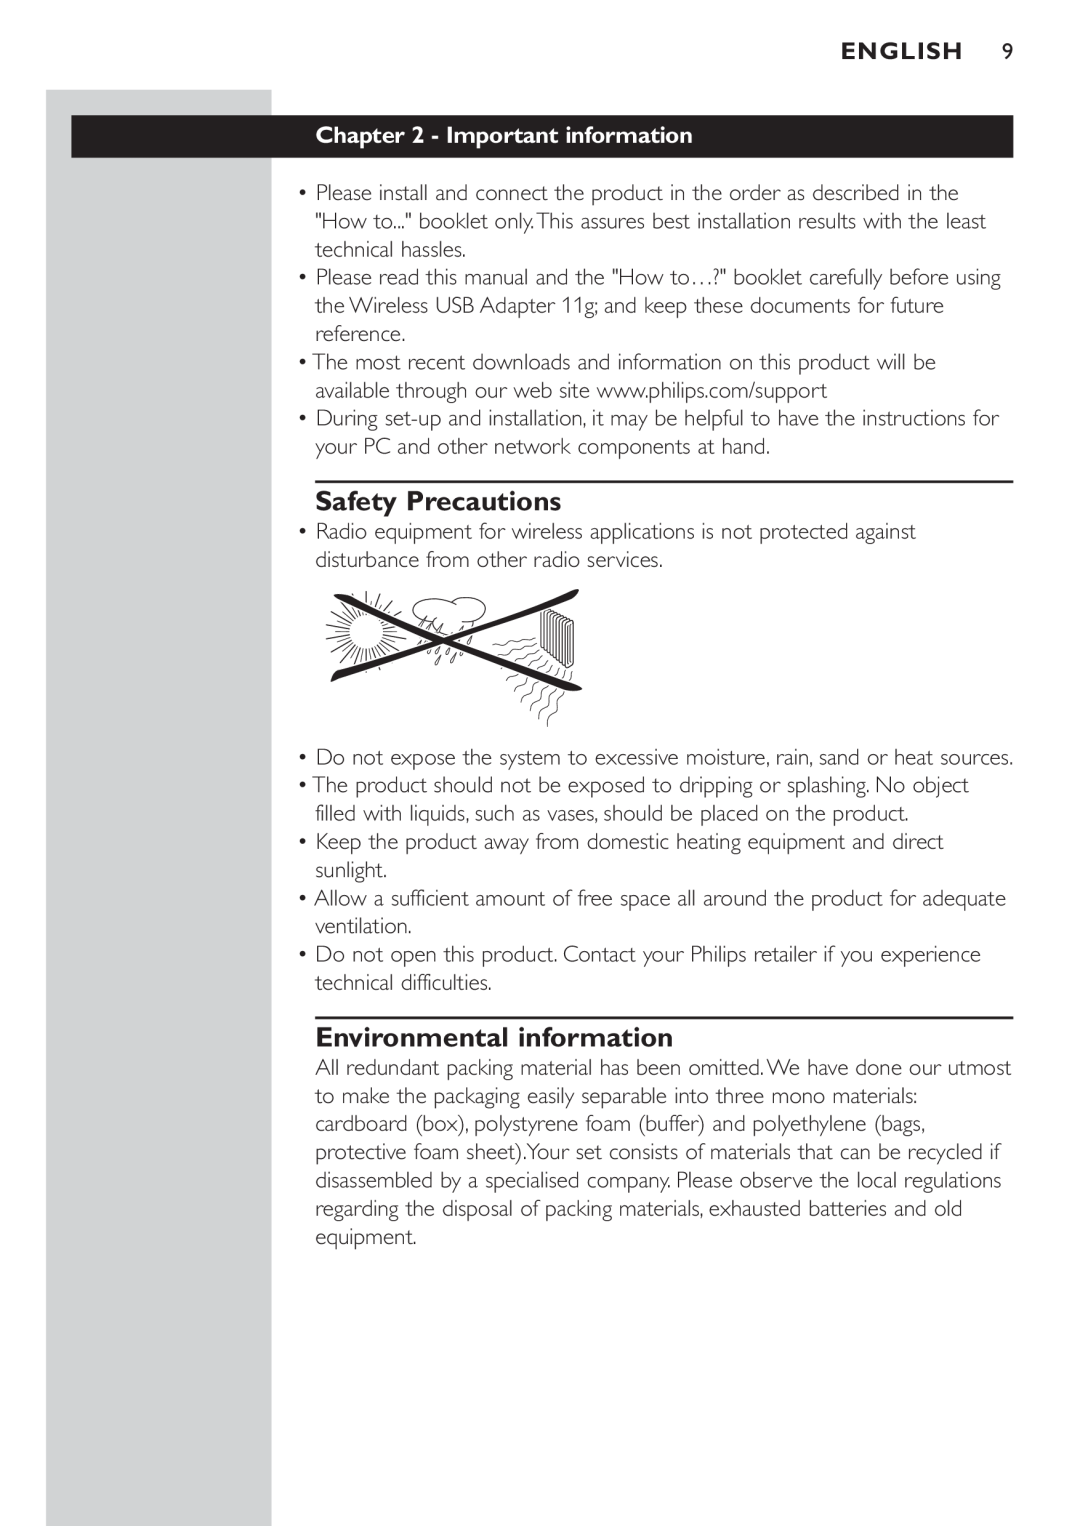 Philips CPWUA054 manual Safety Precautions, Environmental information, Important information, English 